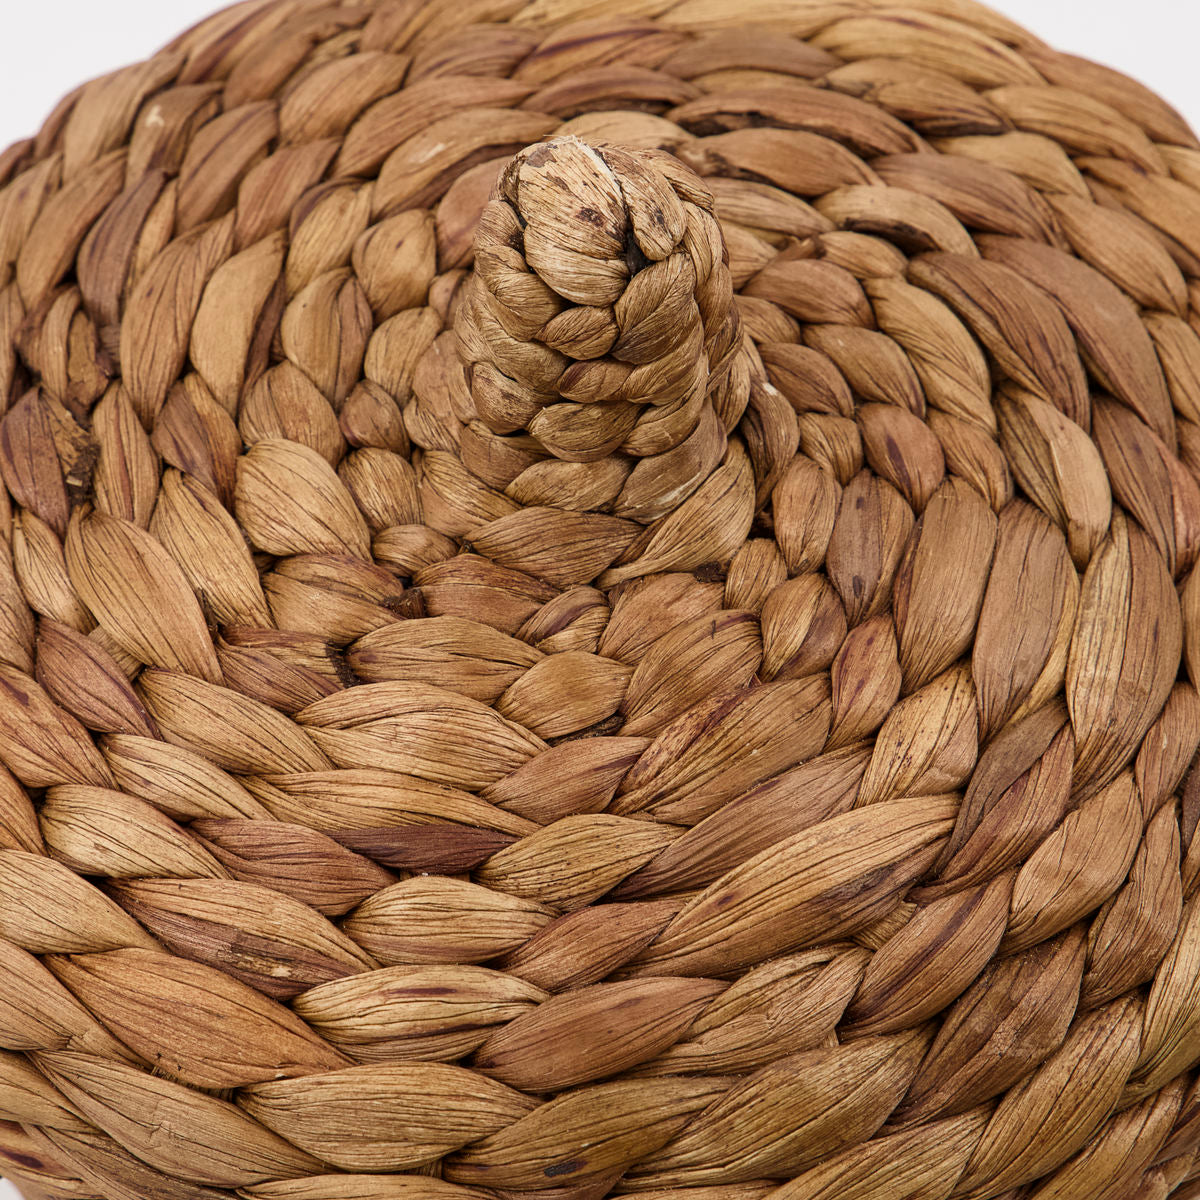 Aske Seagrass Baskets